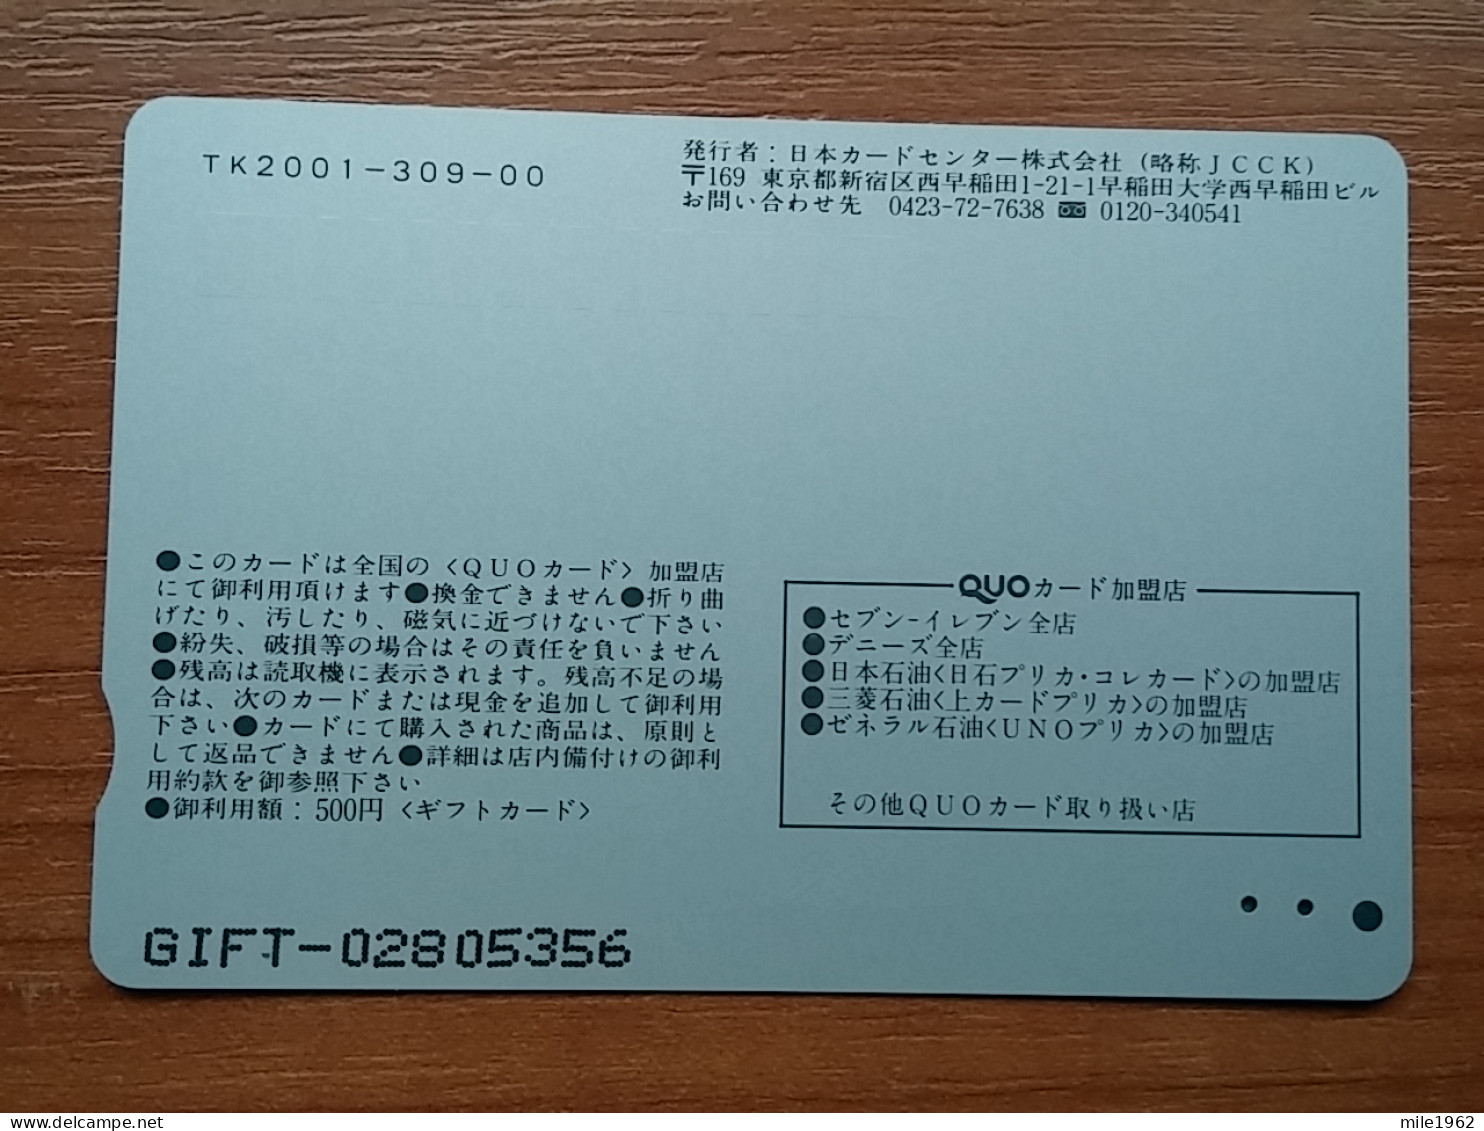 T-401 - JAPAN, Japon, Nipon, Carte Prepayee, Prepaid Card, CAT, CHAT,  - Katten